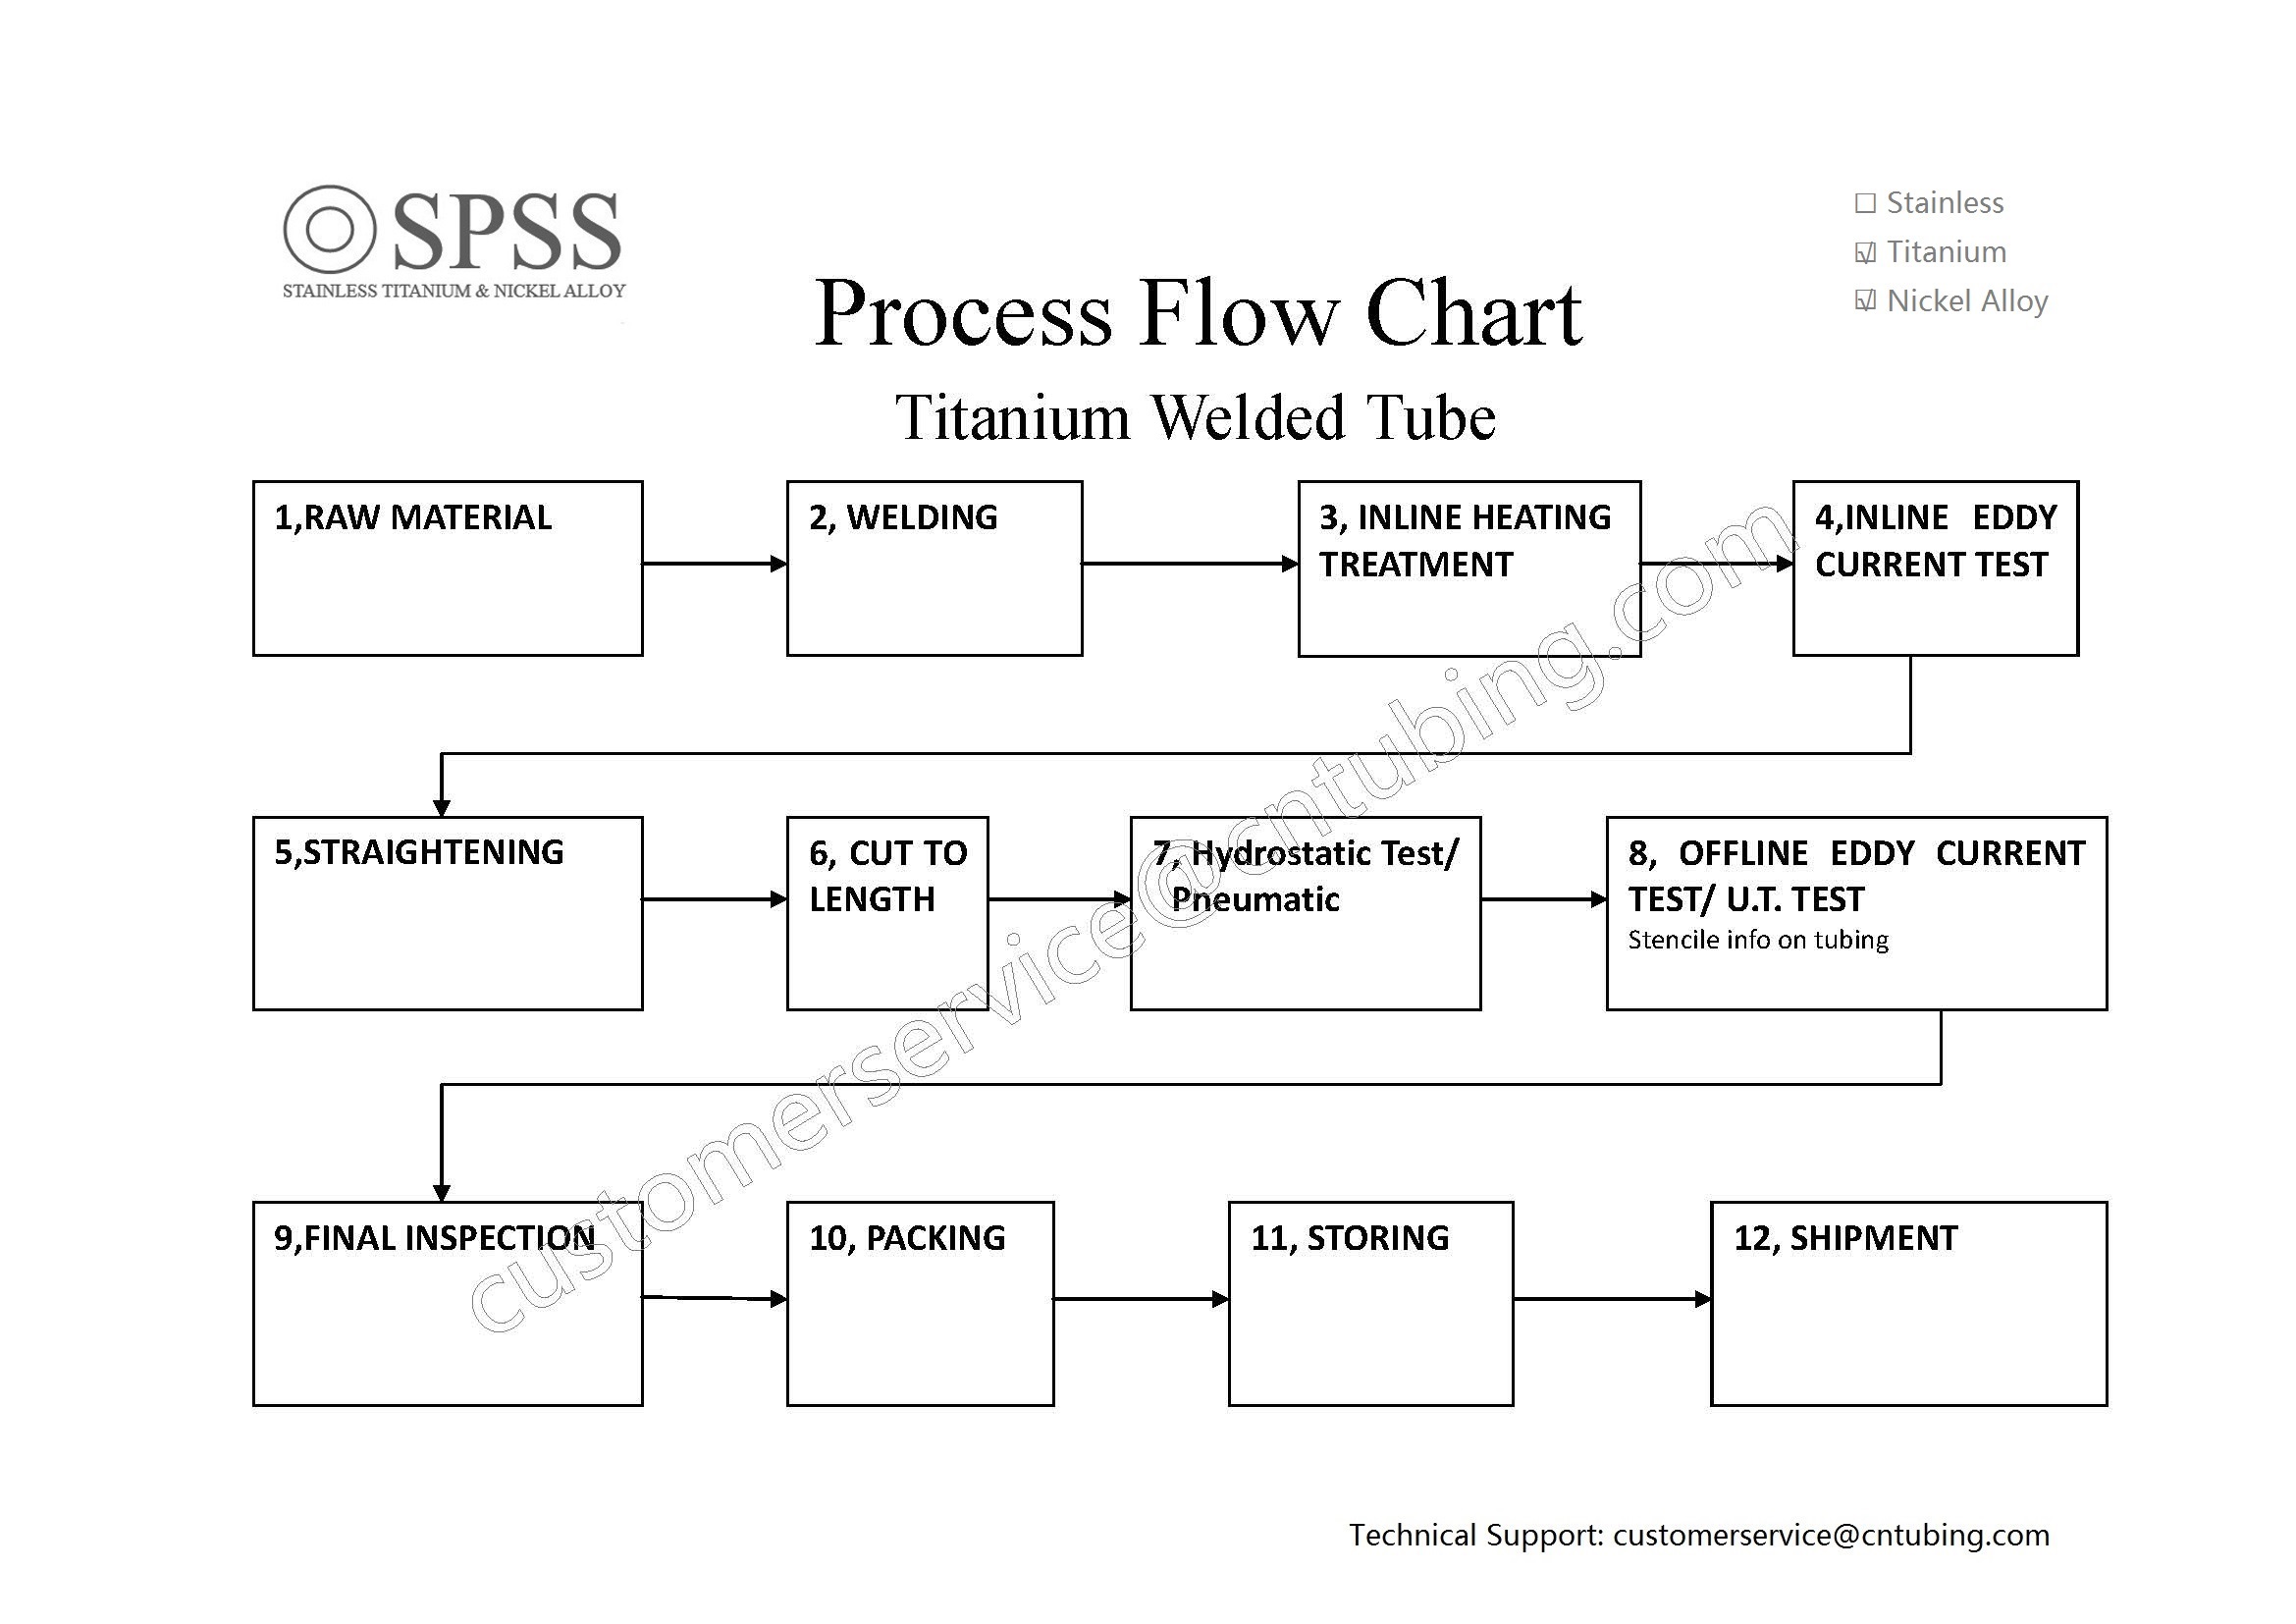 process flow chart - Titanium Welded Tube.jpg